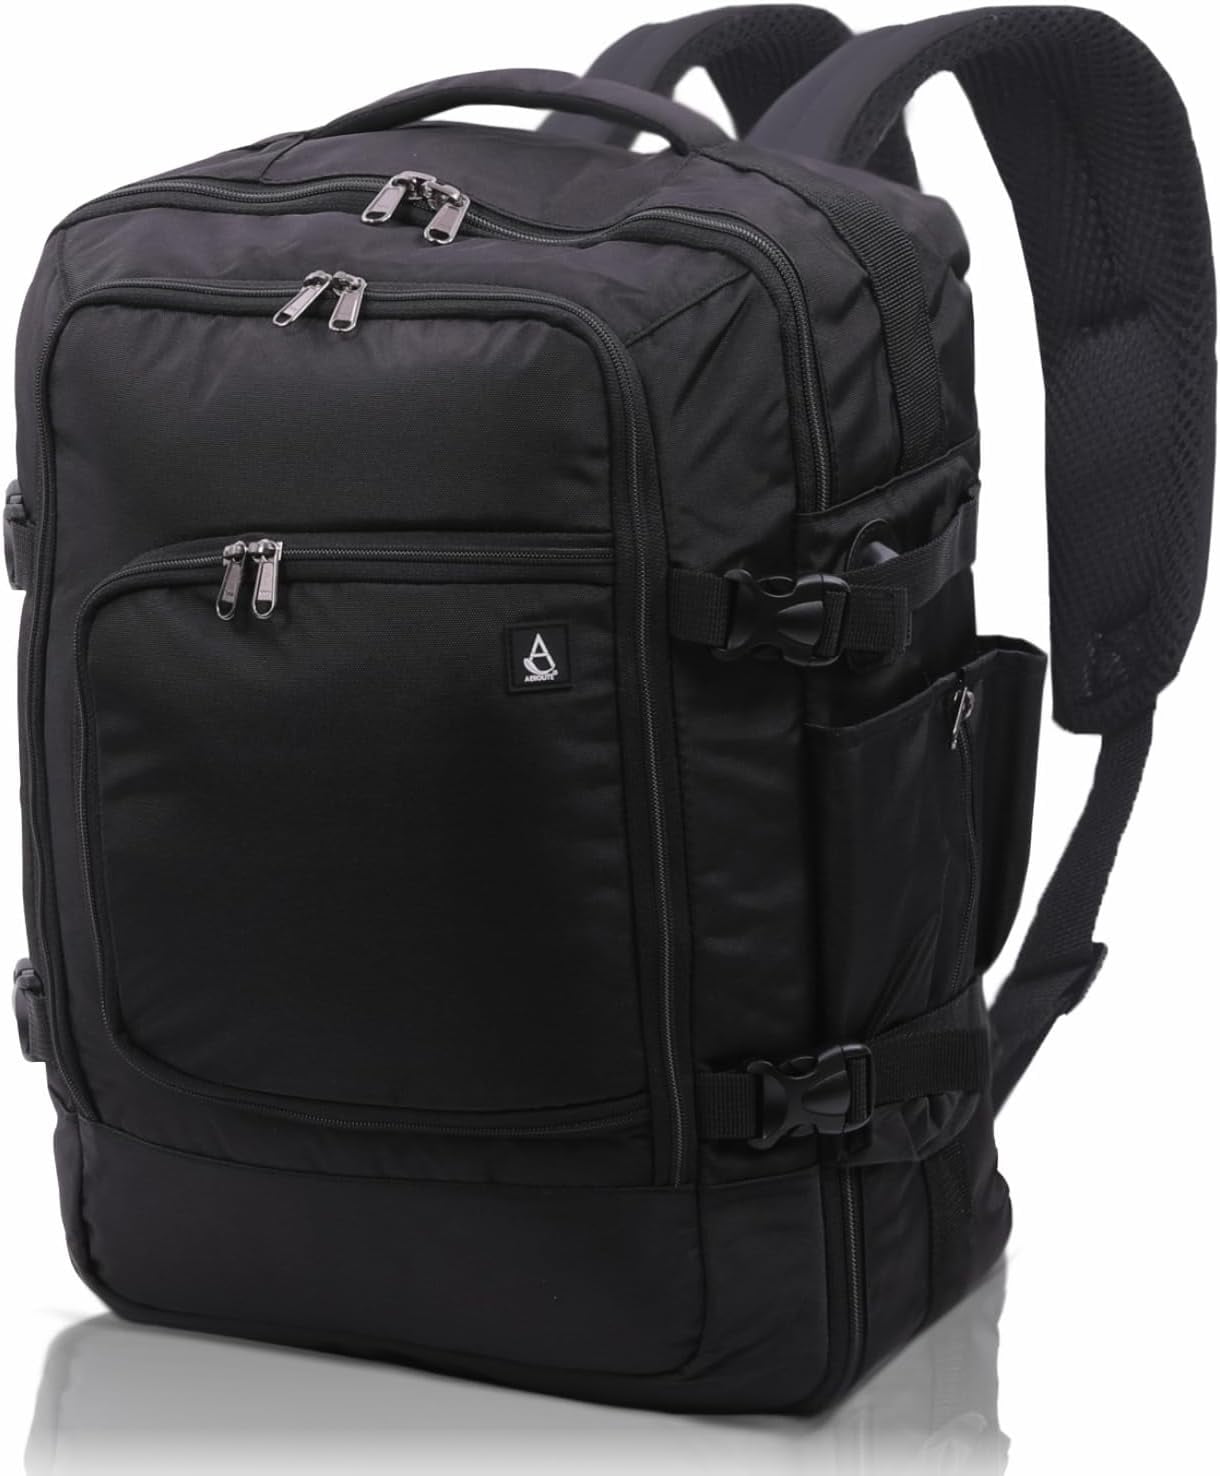 Aerolite 18x14x9” AA and Delta Maximum Size Backpack EcoFriendly Cabin ...